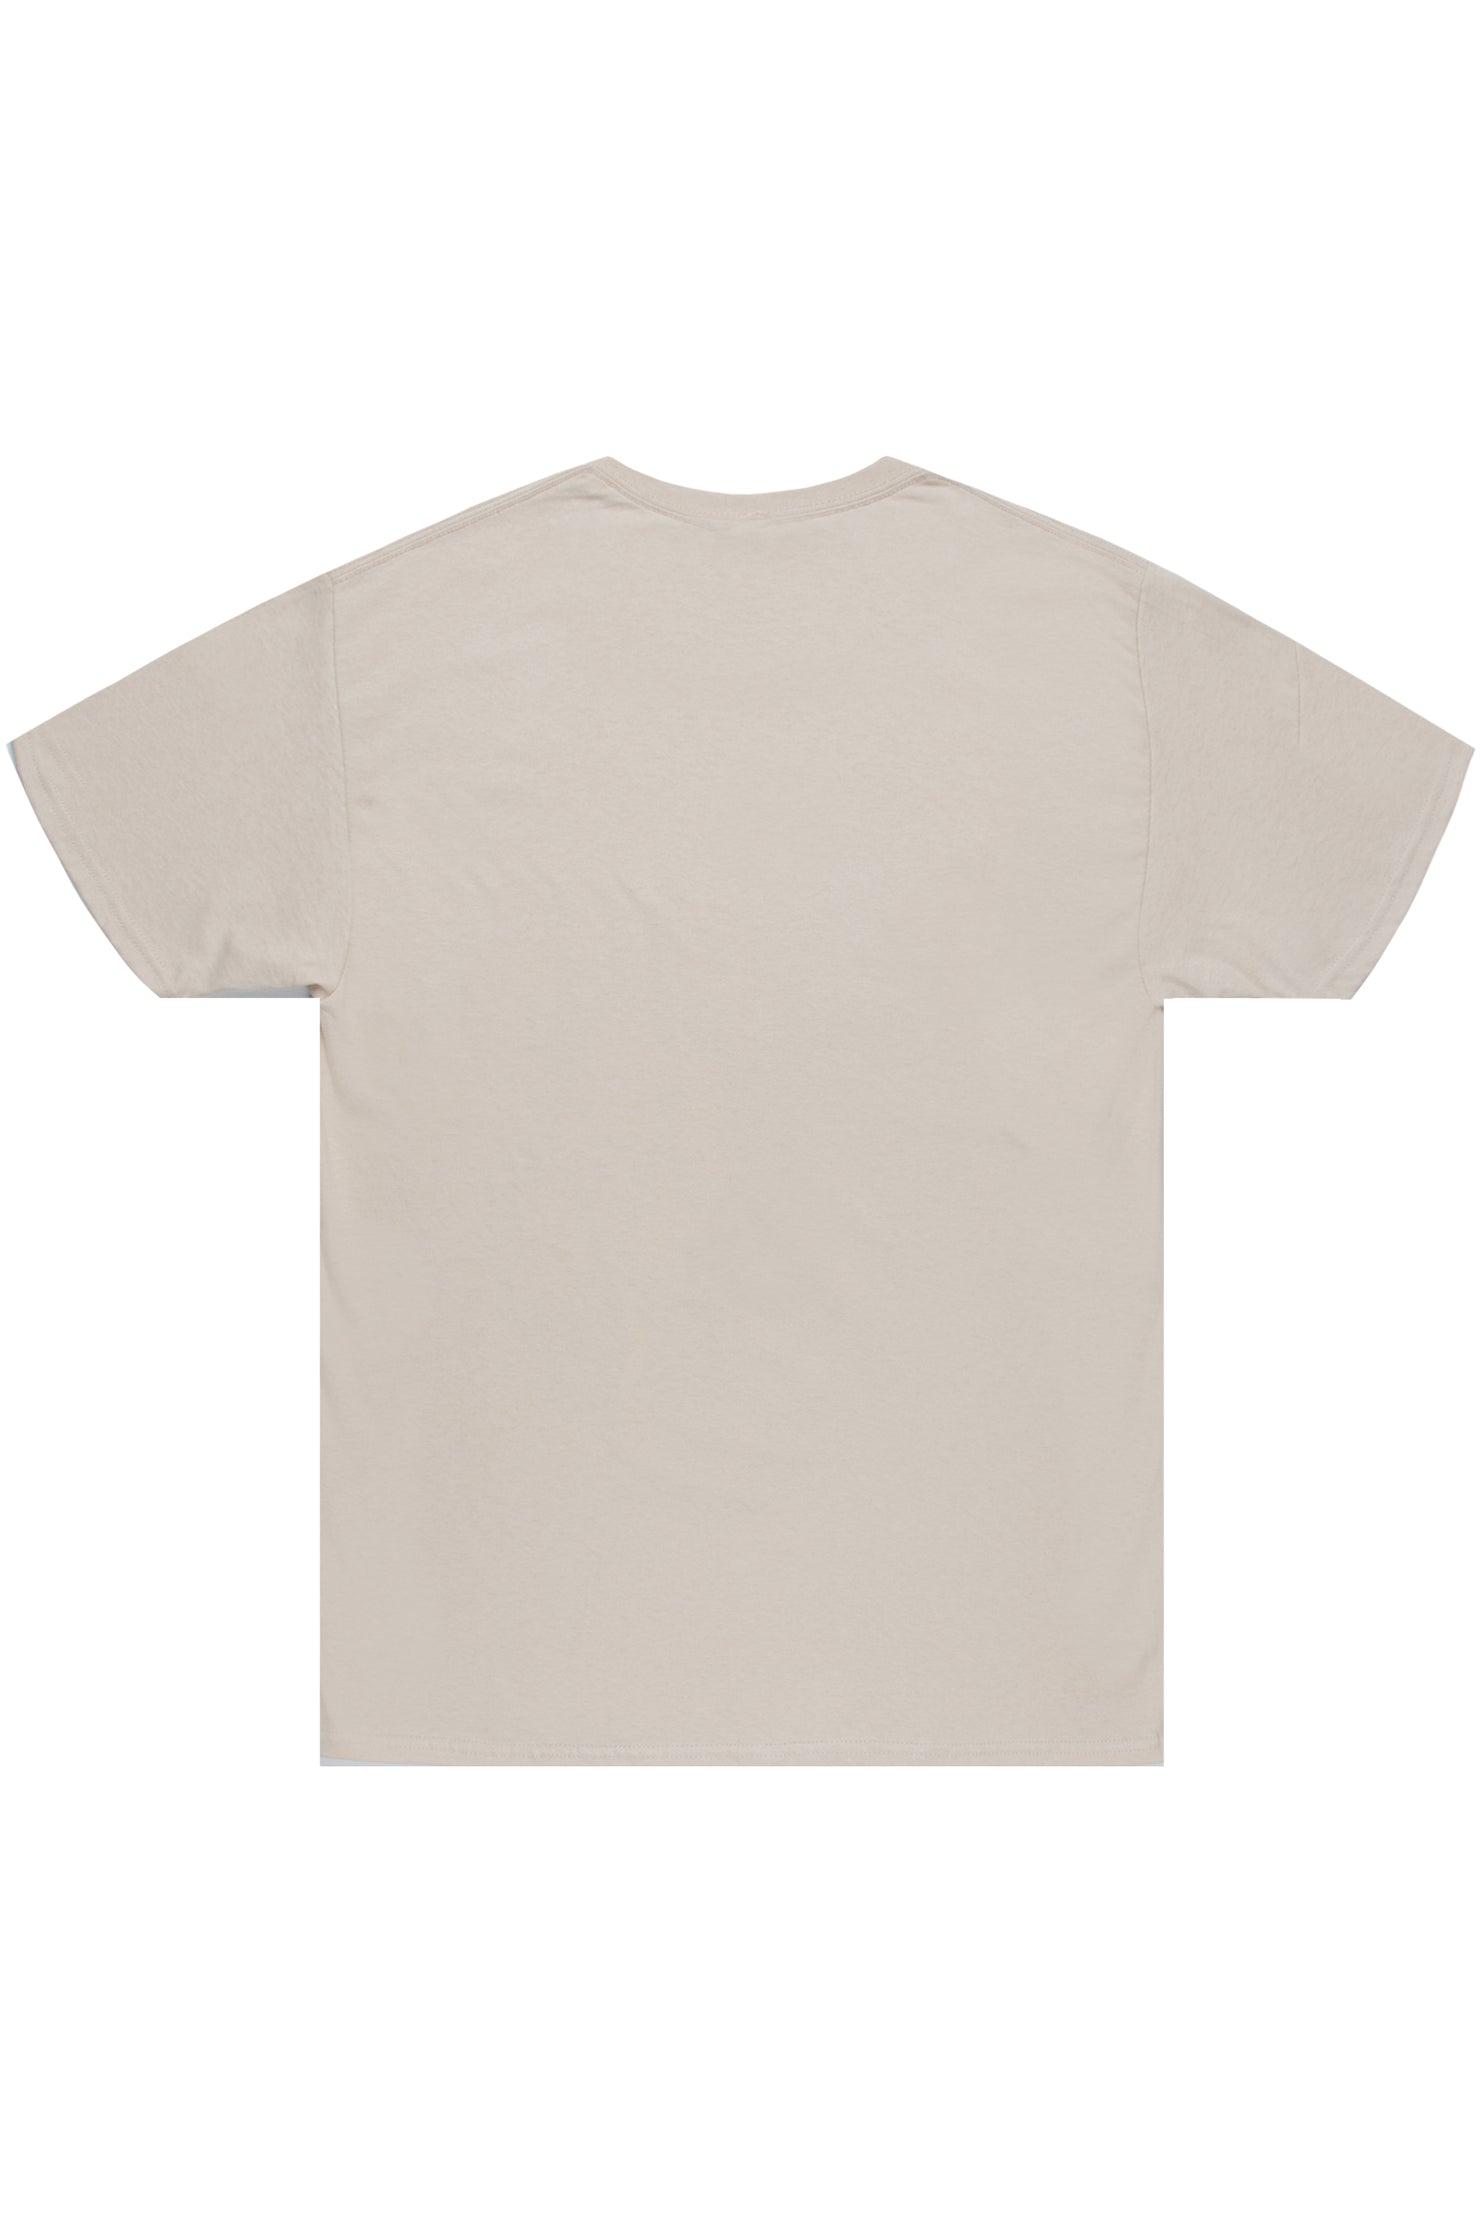 Octavio Printed T-Shirt-Beige/White